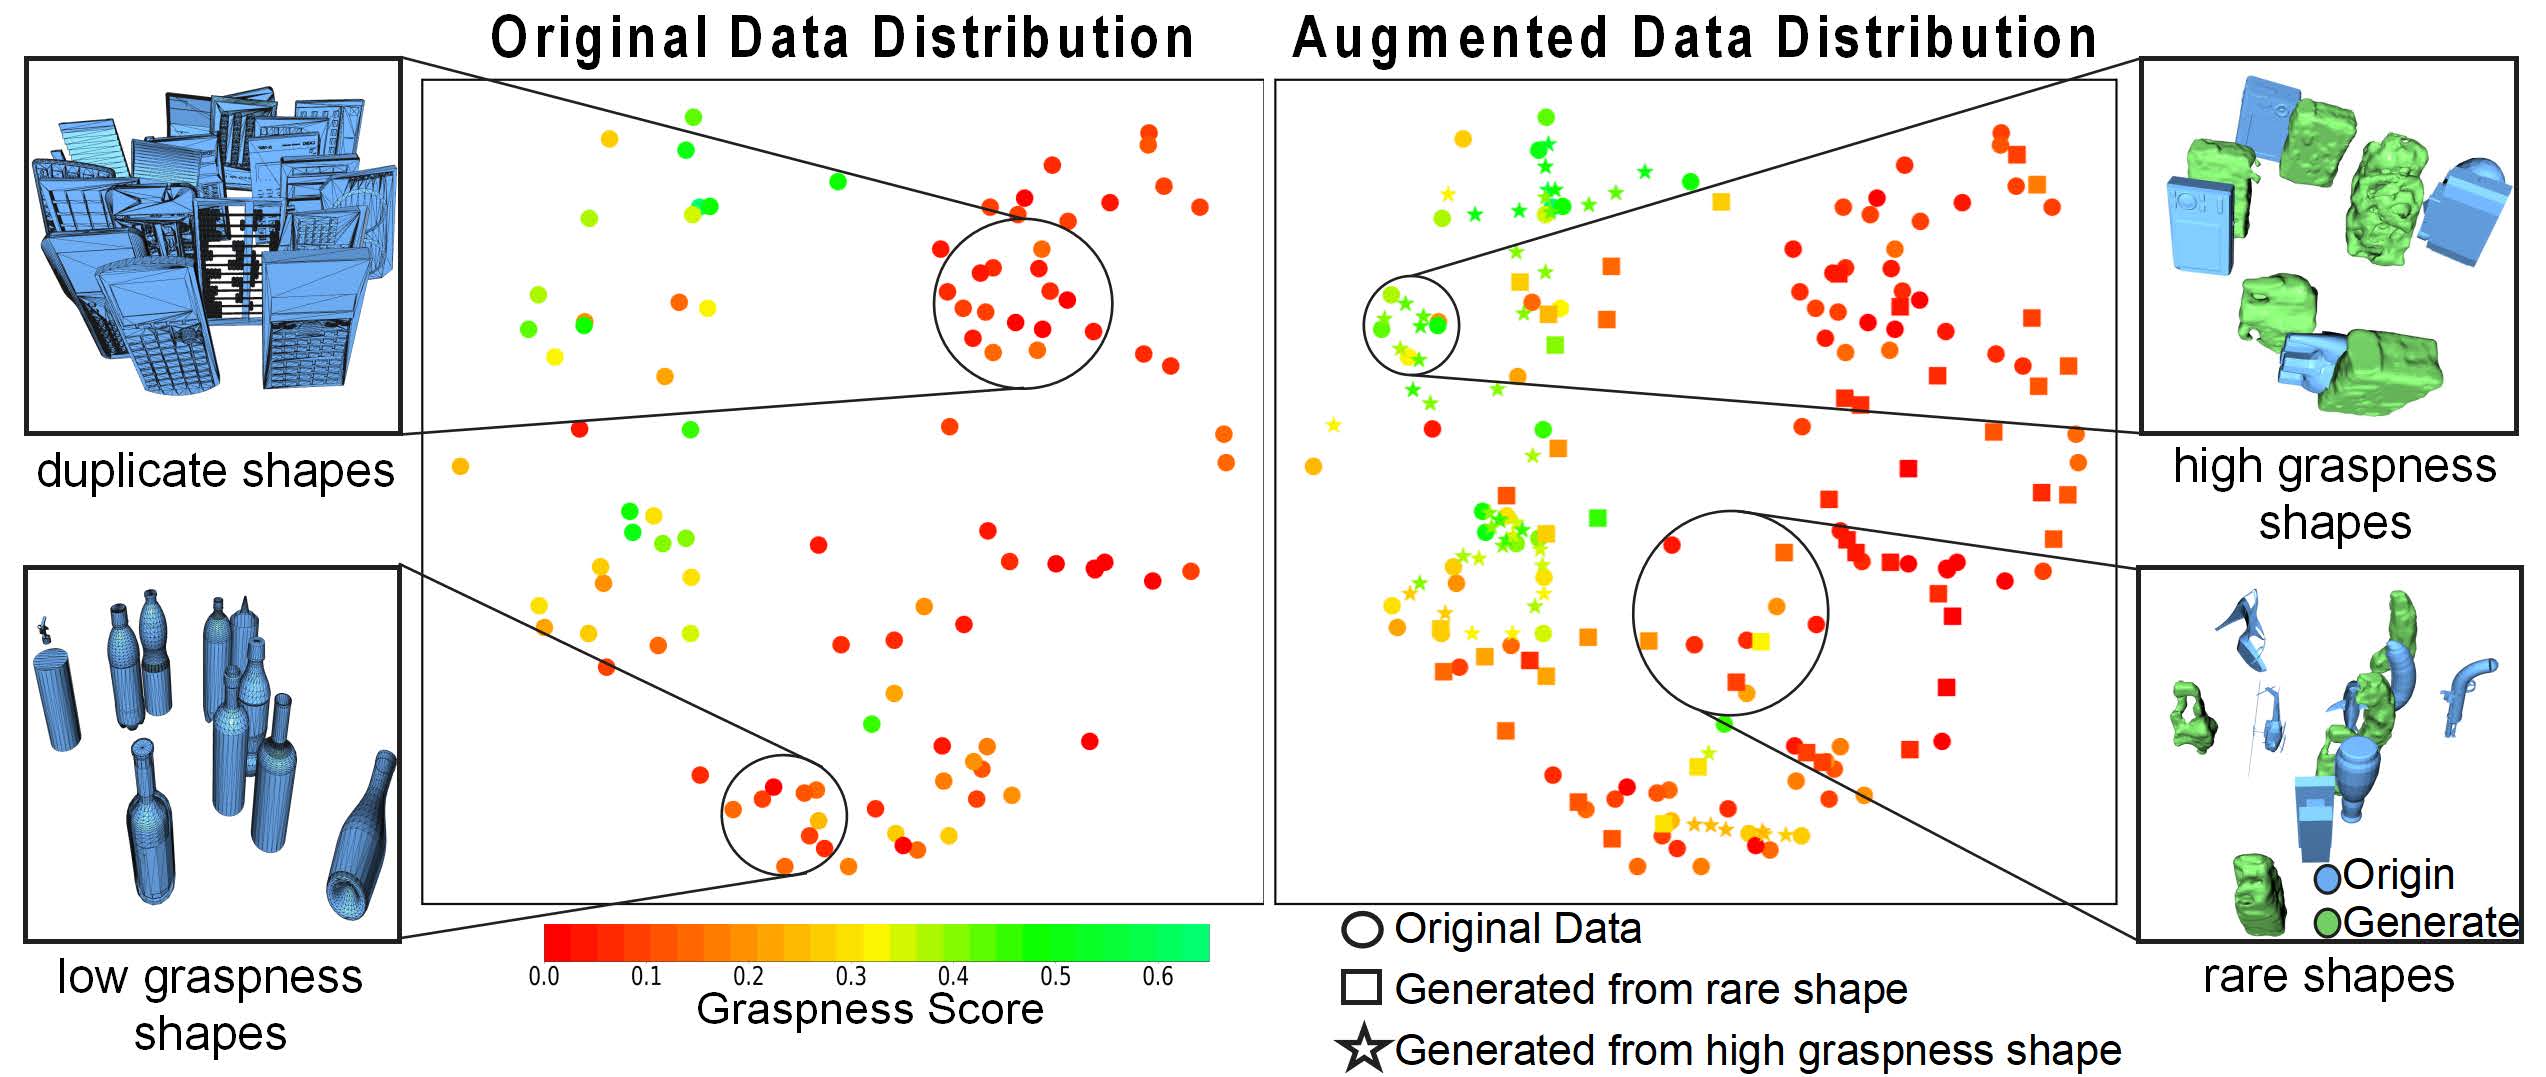 Original and augmented data distribution comparison.